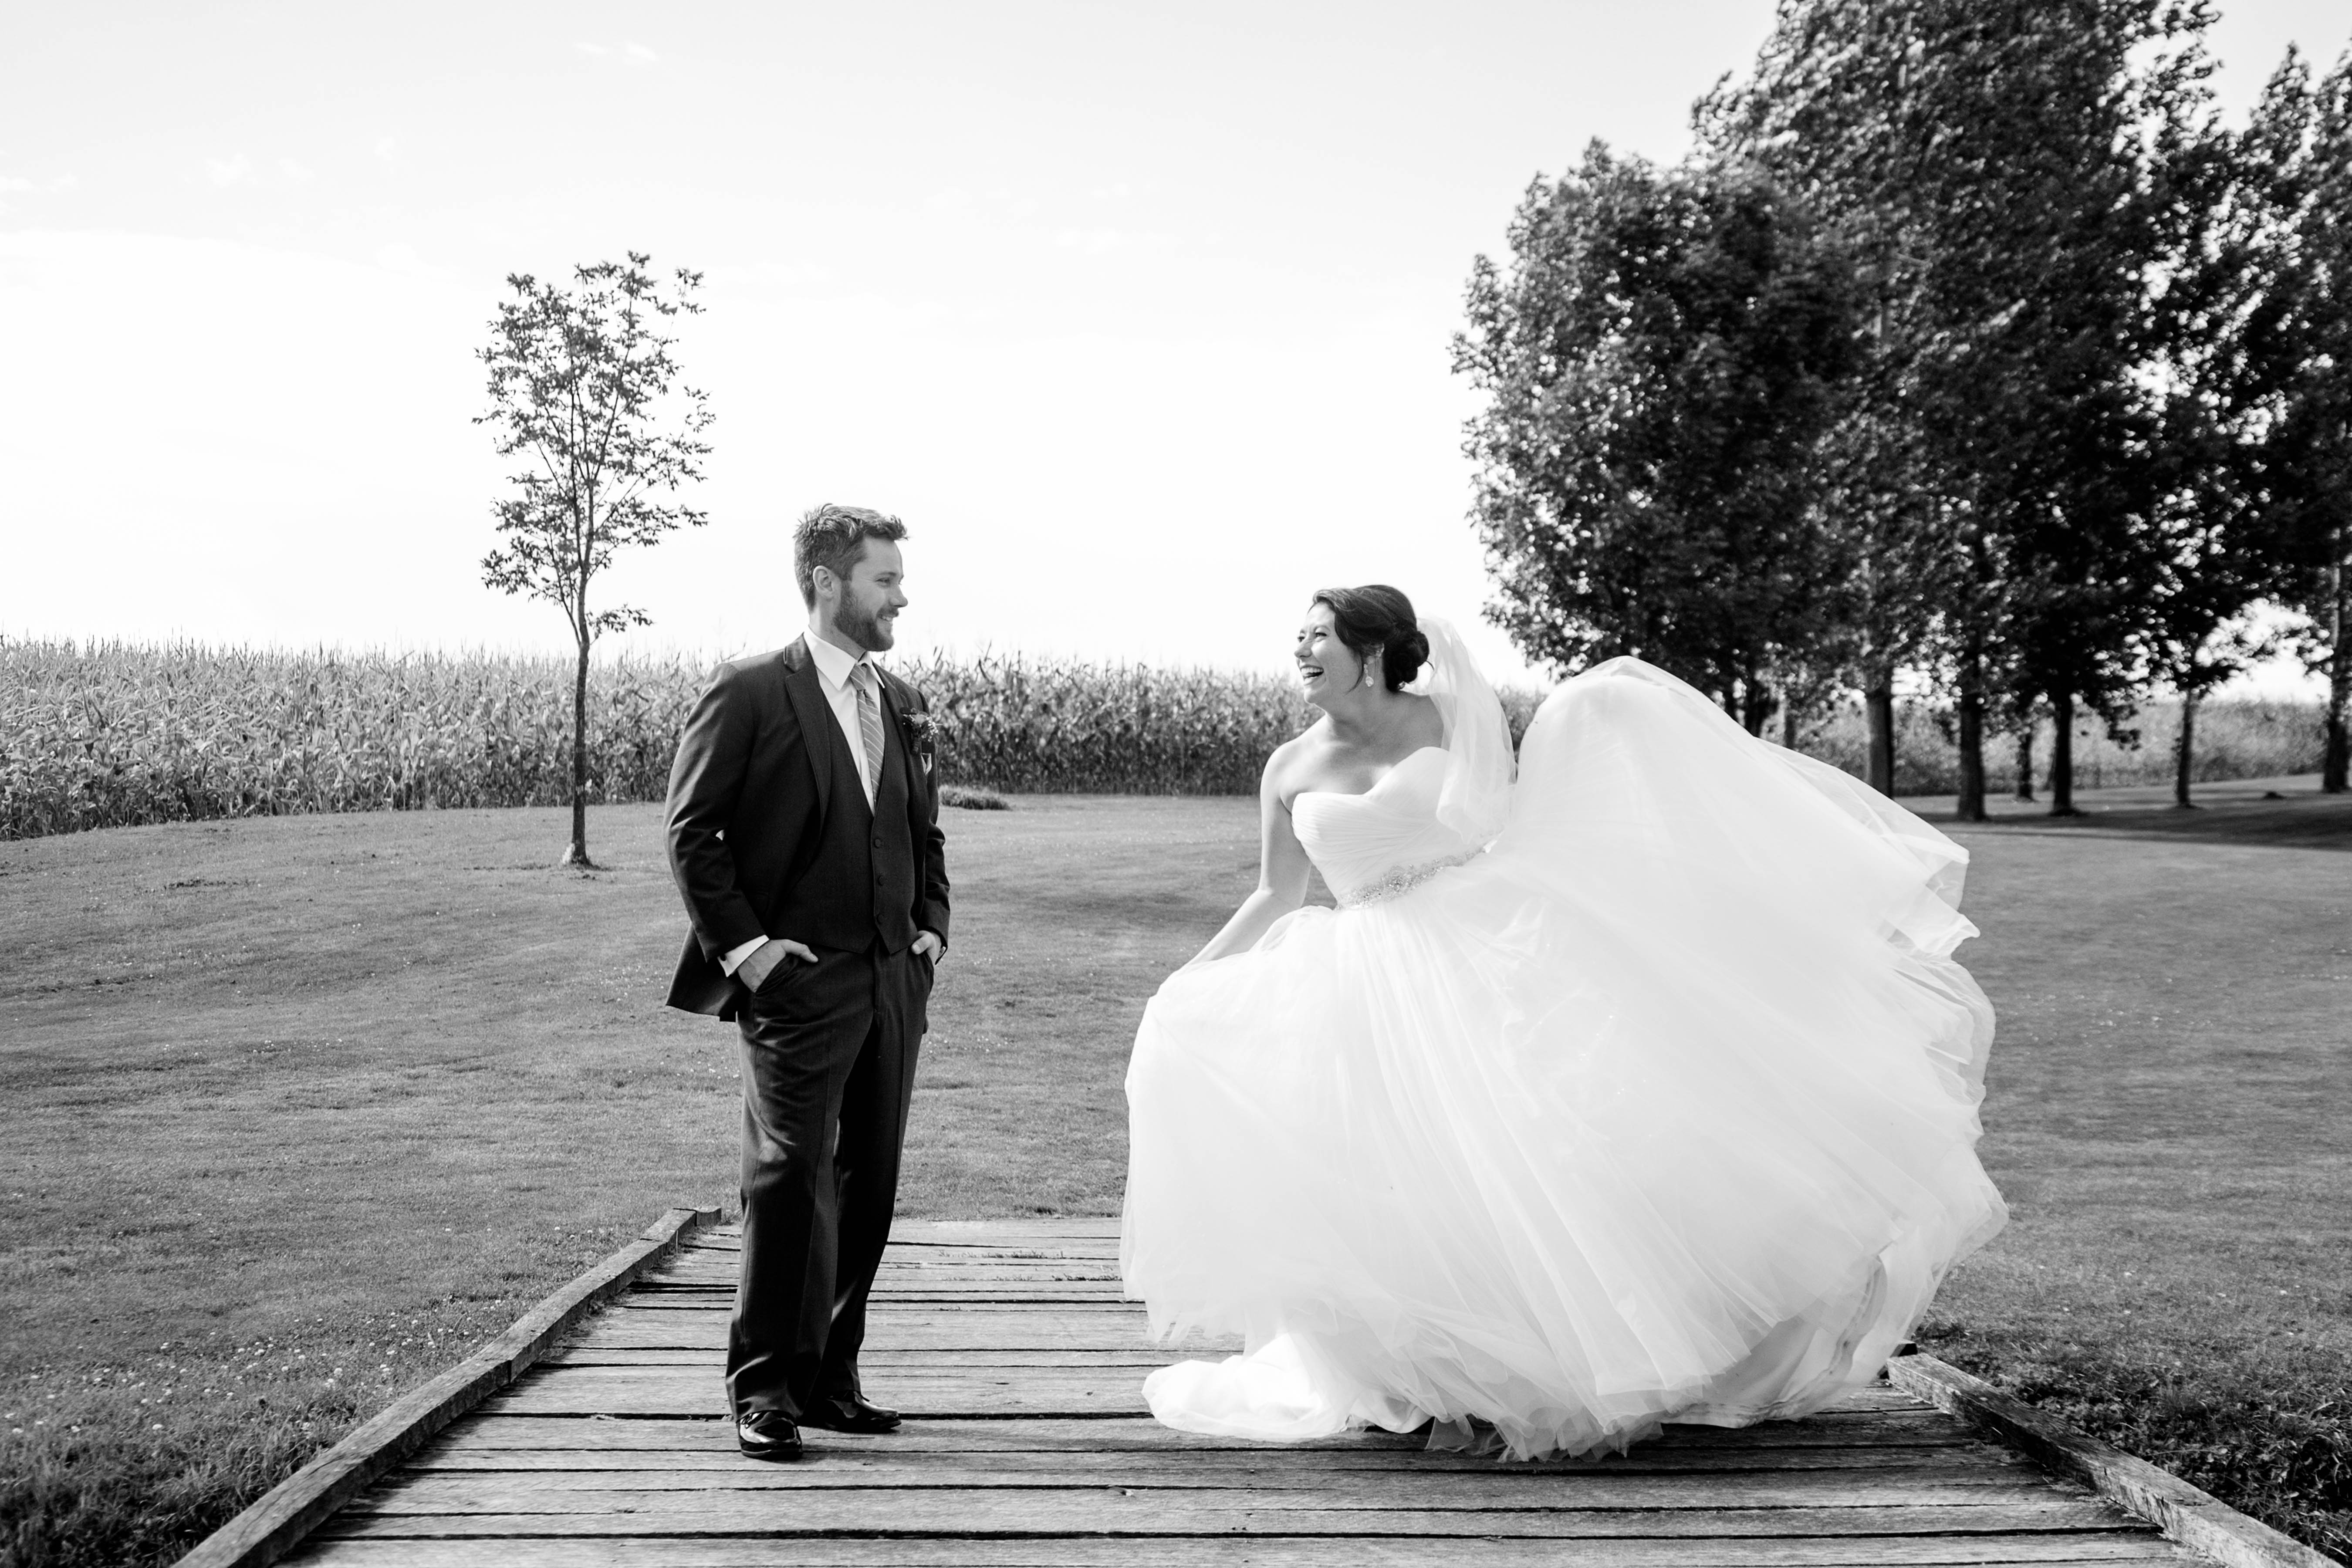 Meet a Wedding Photographer | Wedding Photographer London, Ontario